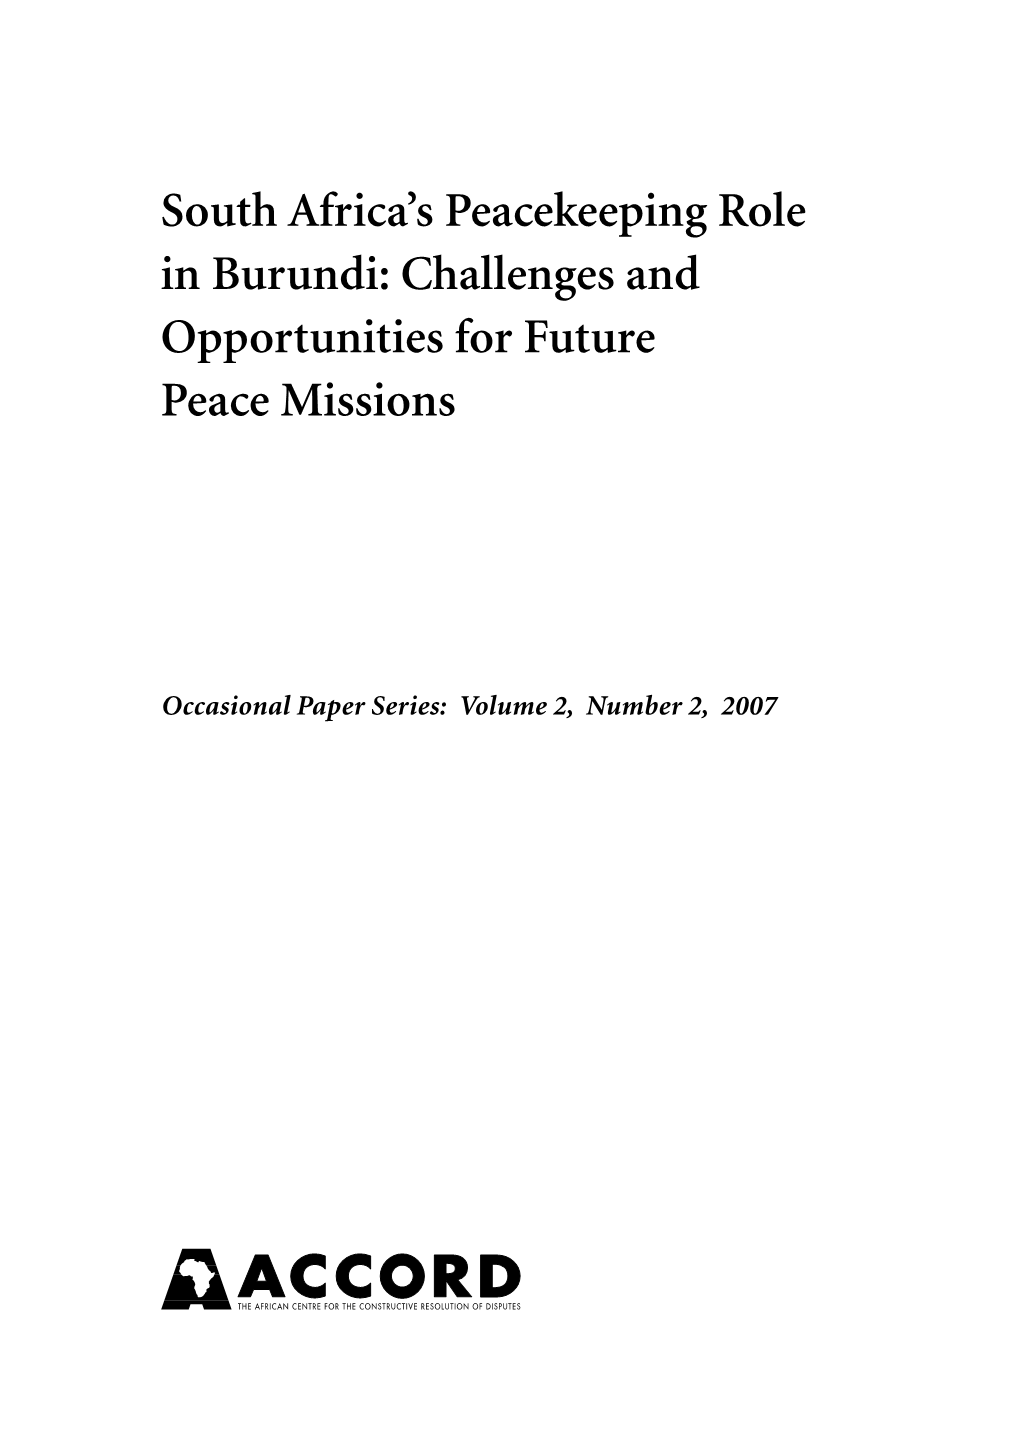 South Africa's Peacekeeping Role in Burundi